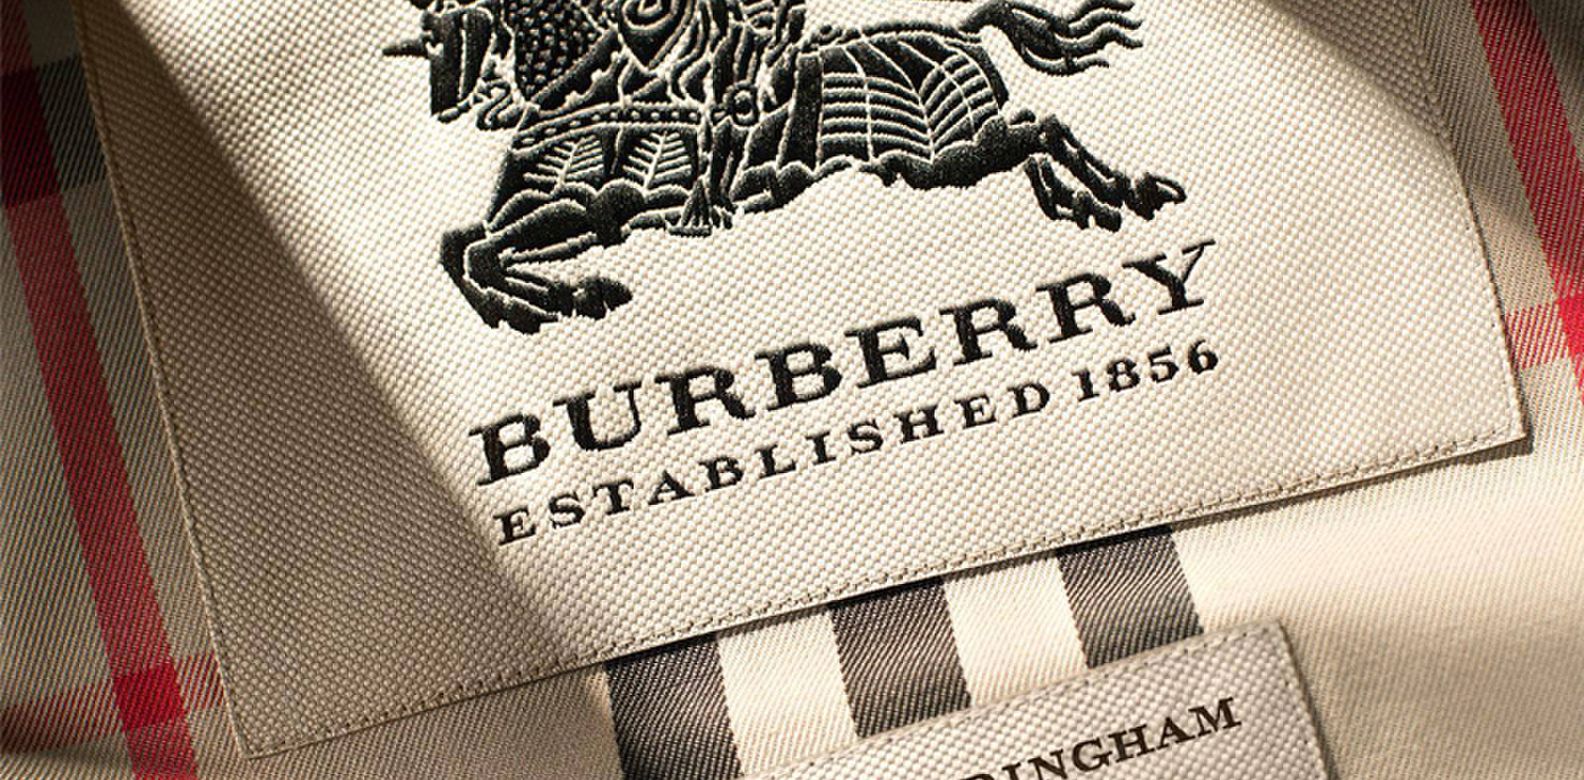 Burberry 1856